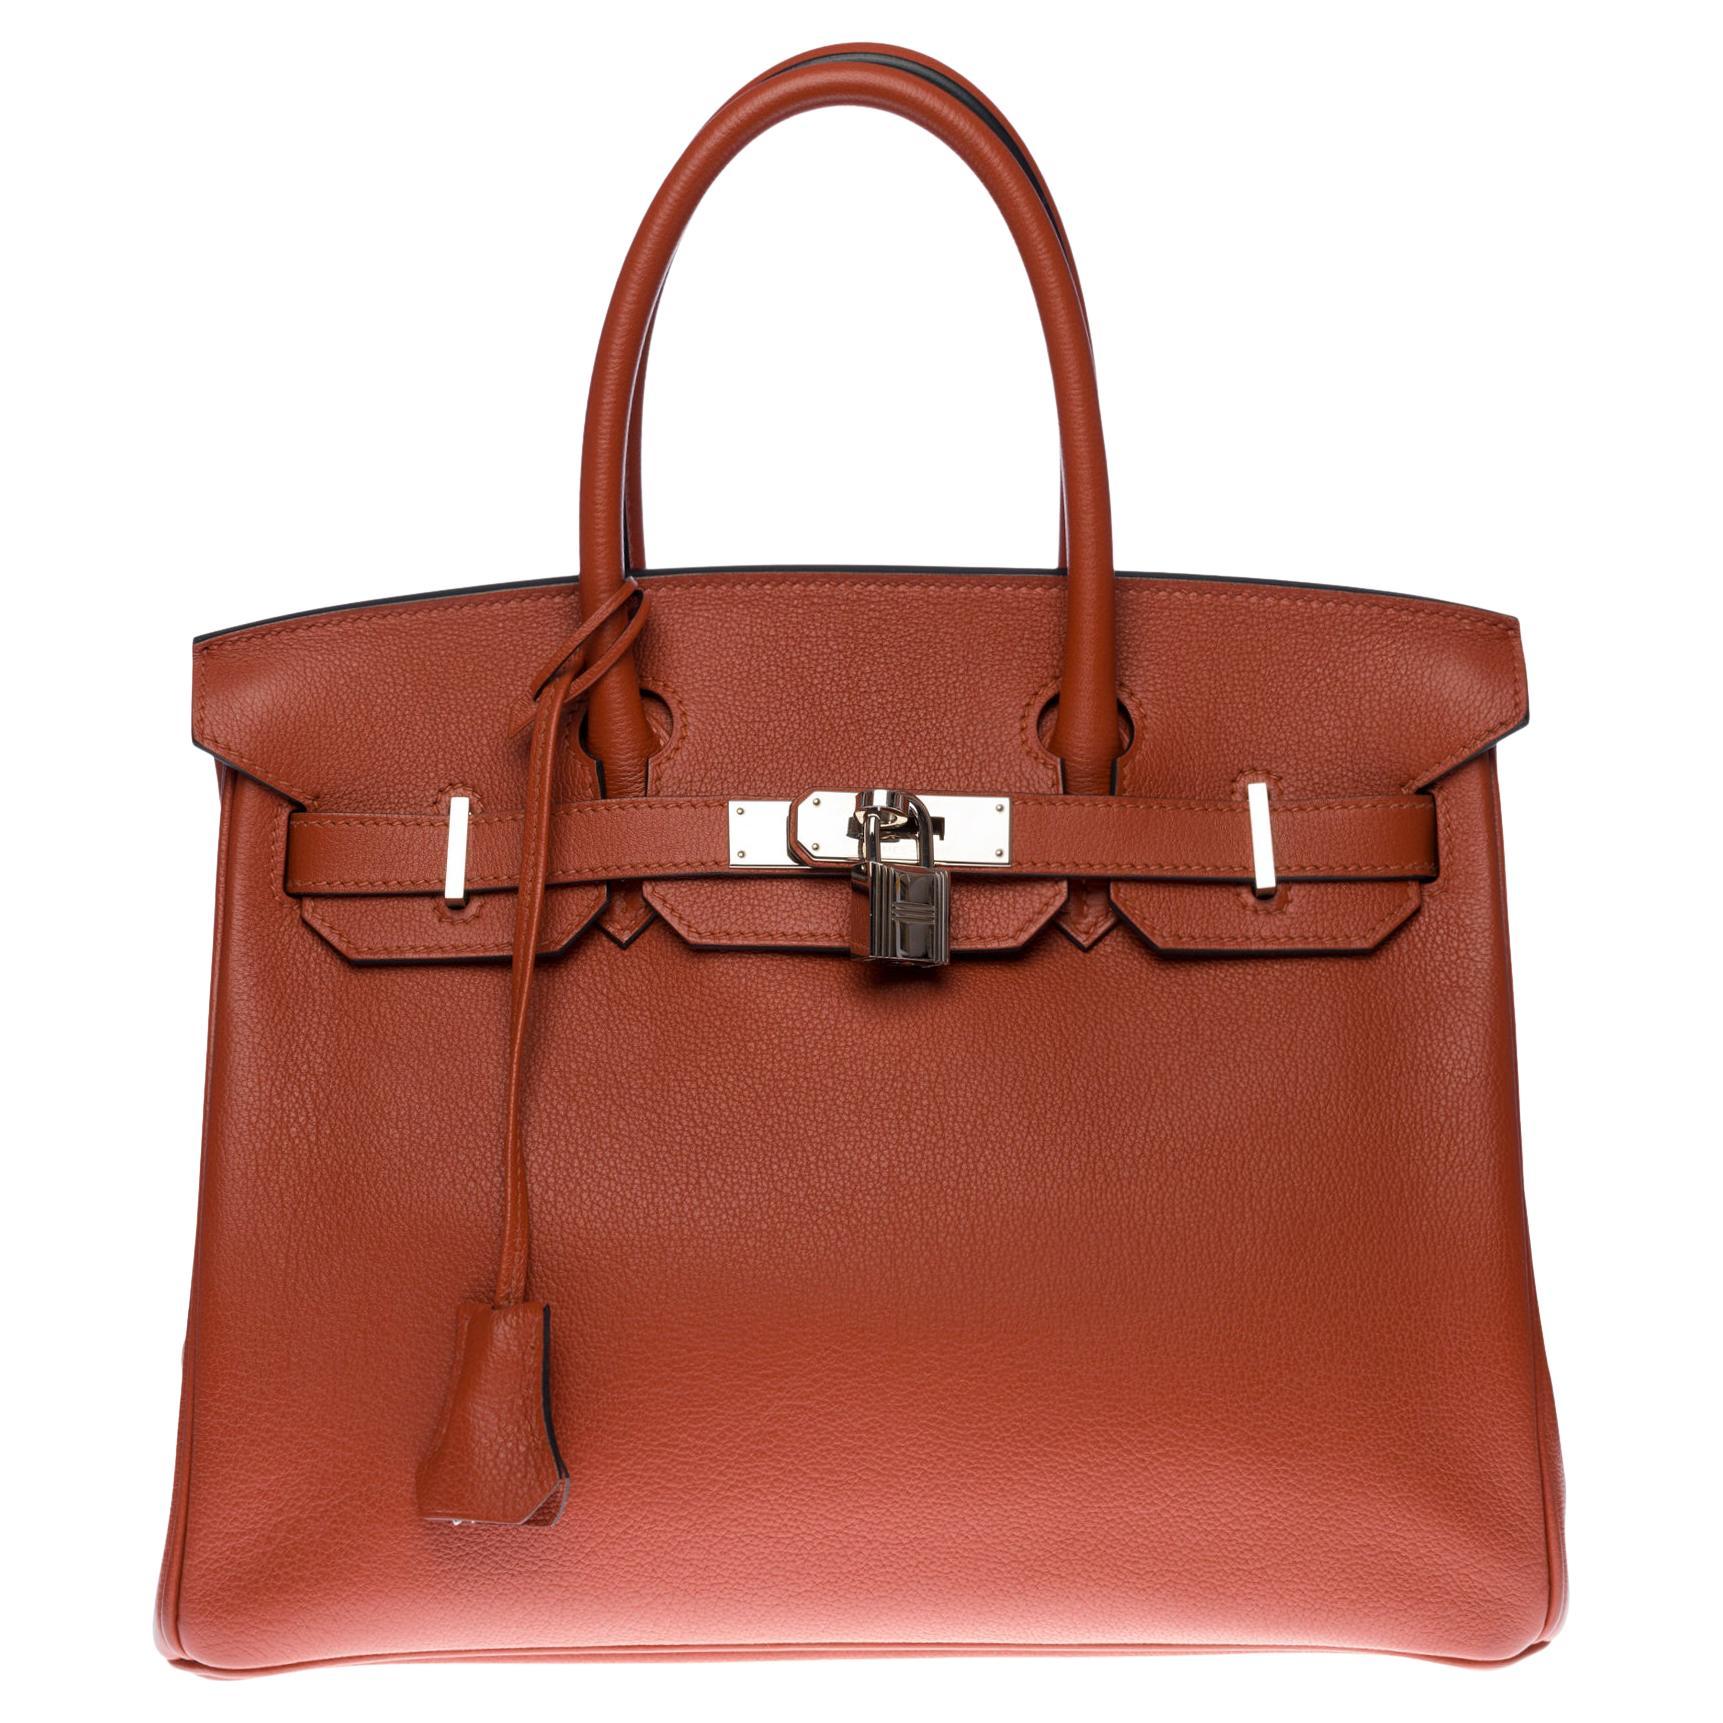 Stunning Hermès Birkin 30 handbag in Cuivre/Copper Mysore Goat leather, SHW